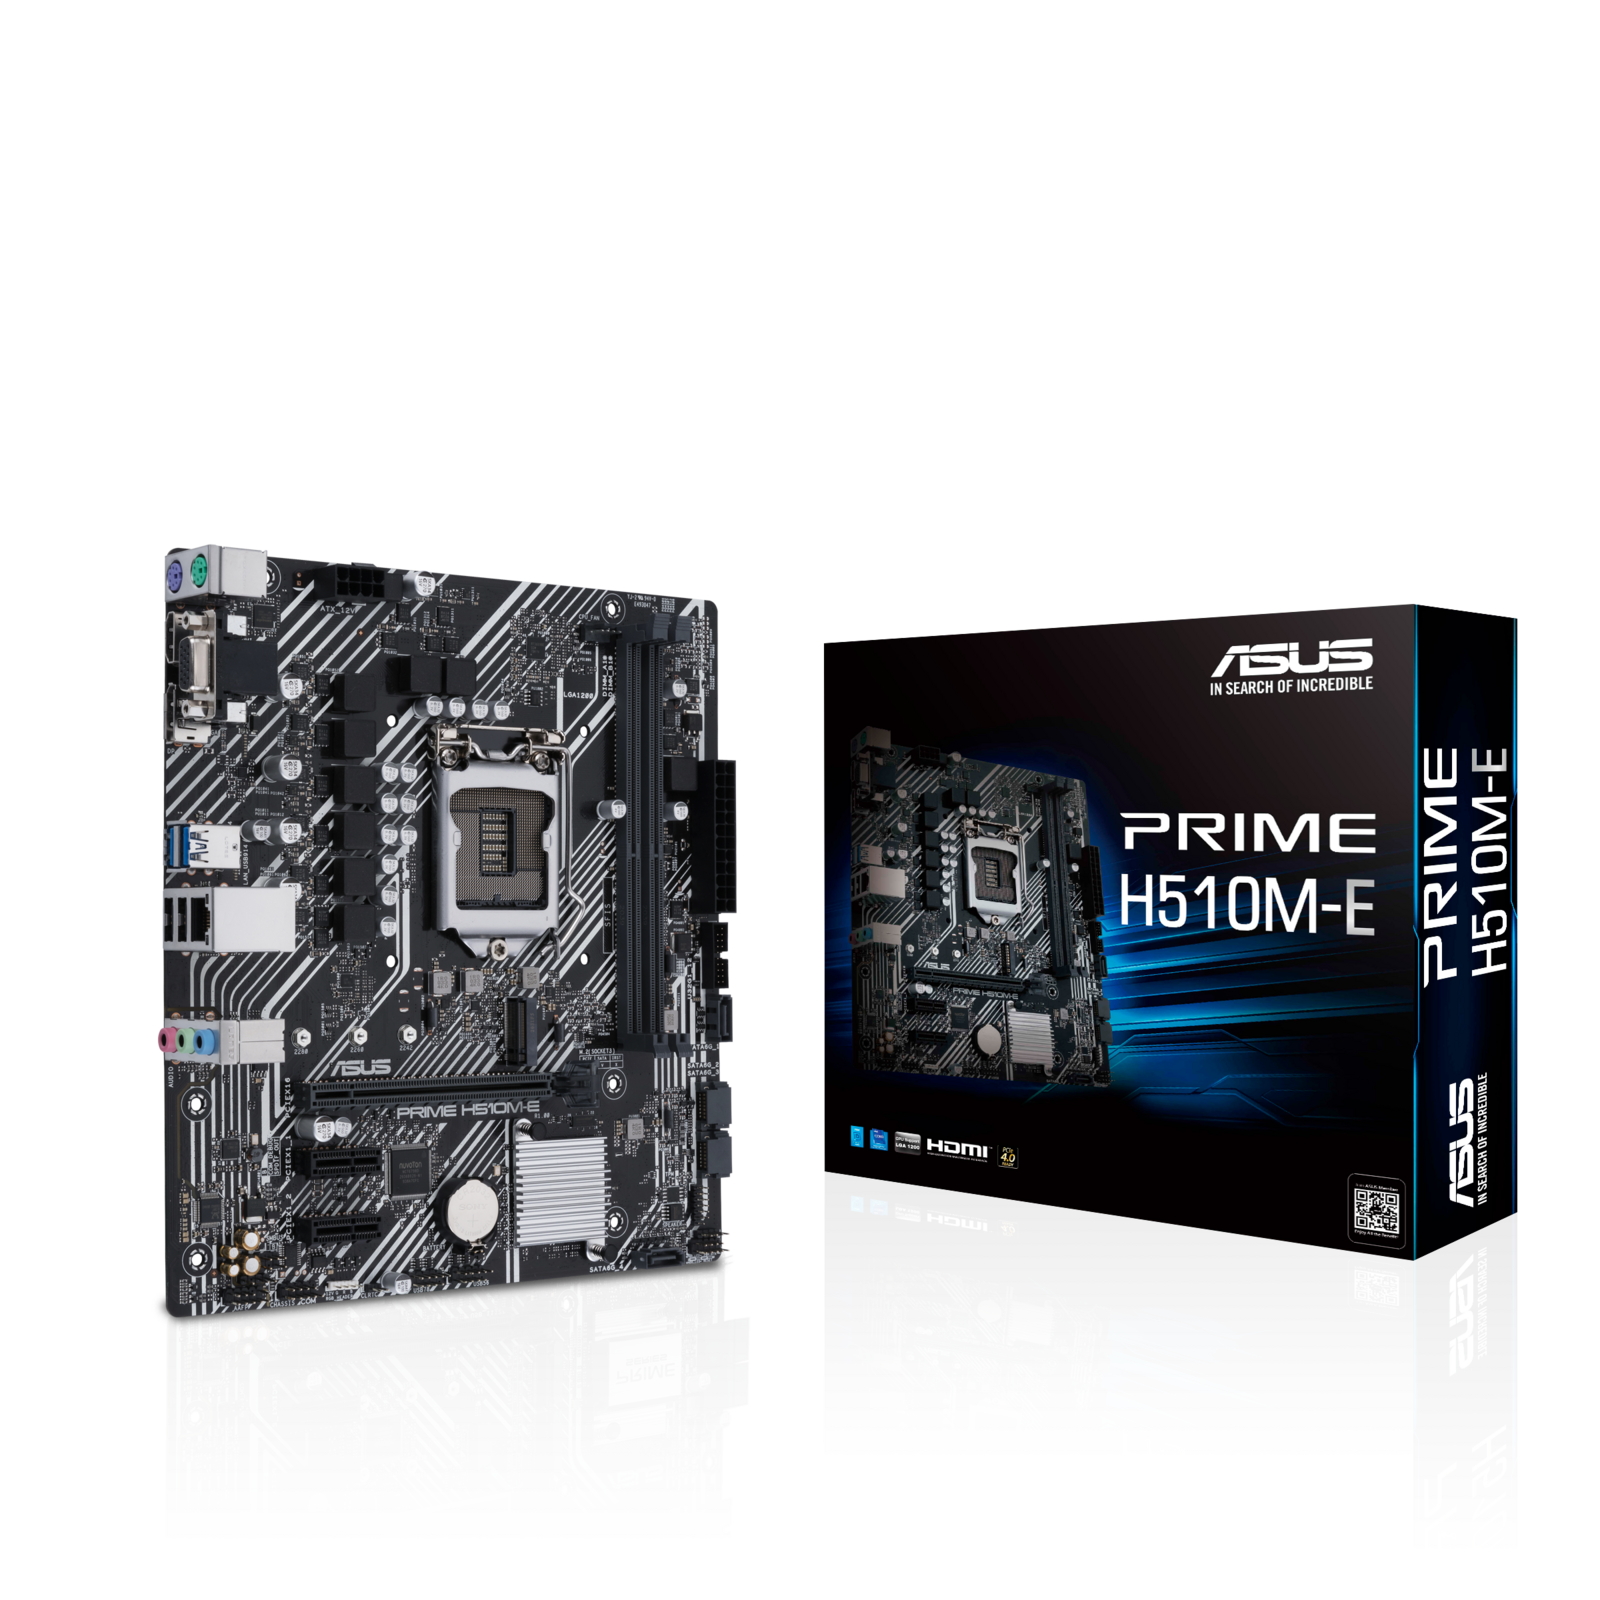 ASUS PRIME H510M-E Intel H510 (LGA 1200) Micro ATX Motherboard PCIe 4.0, 32Gbps M.2 slot, 1 Gb Ethernet, DisplayPort, HDMI, D-Sub, SATA 6Gbps